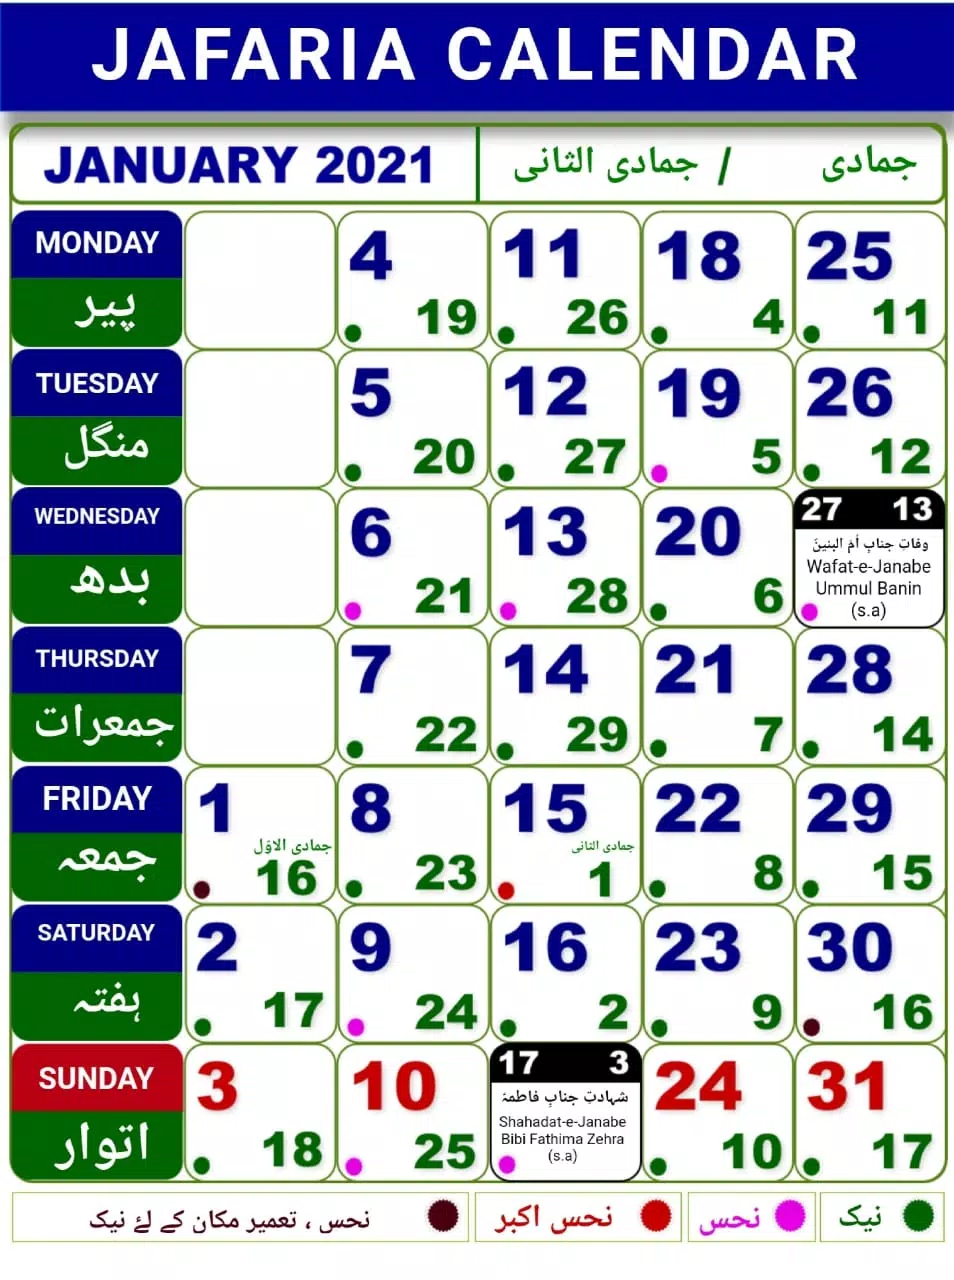 Shia Calendar 2022 Jafaria Shia Calendar 2021 & 2022 For Android - Apk Download